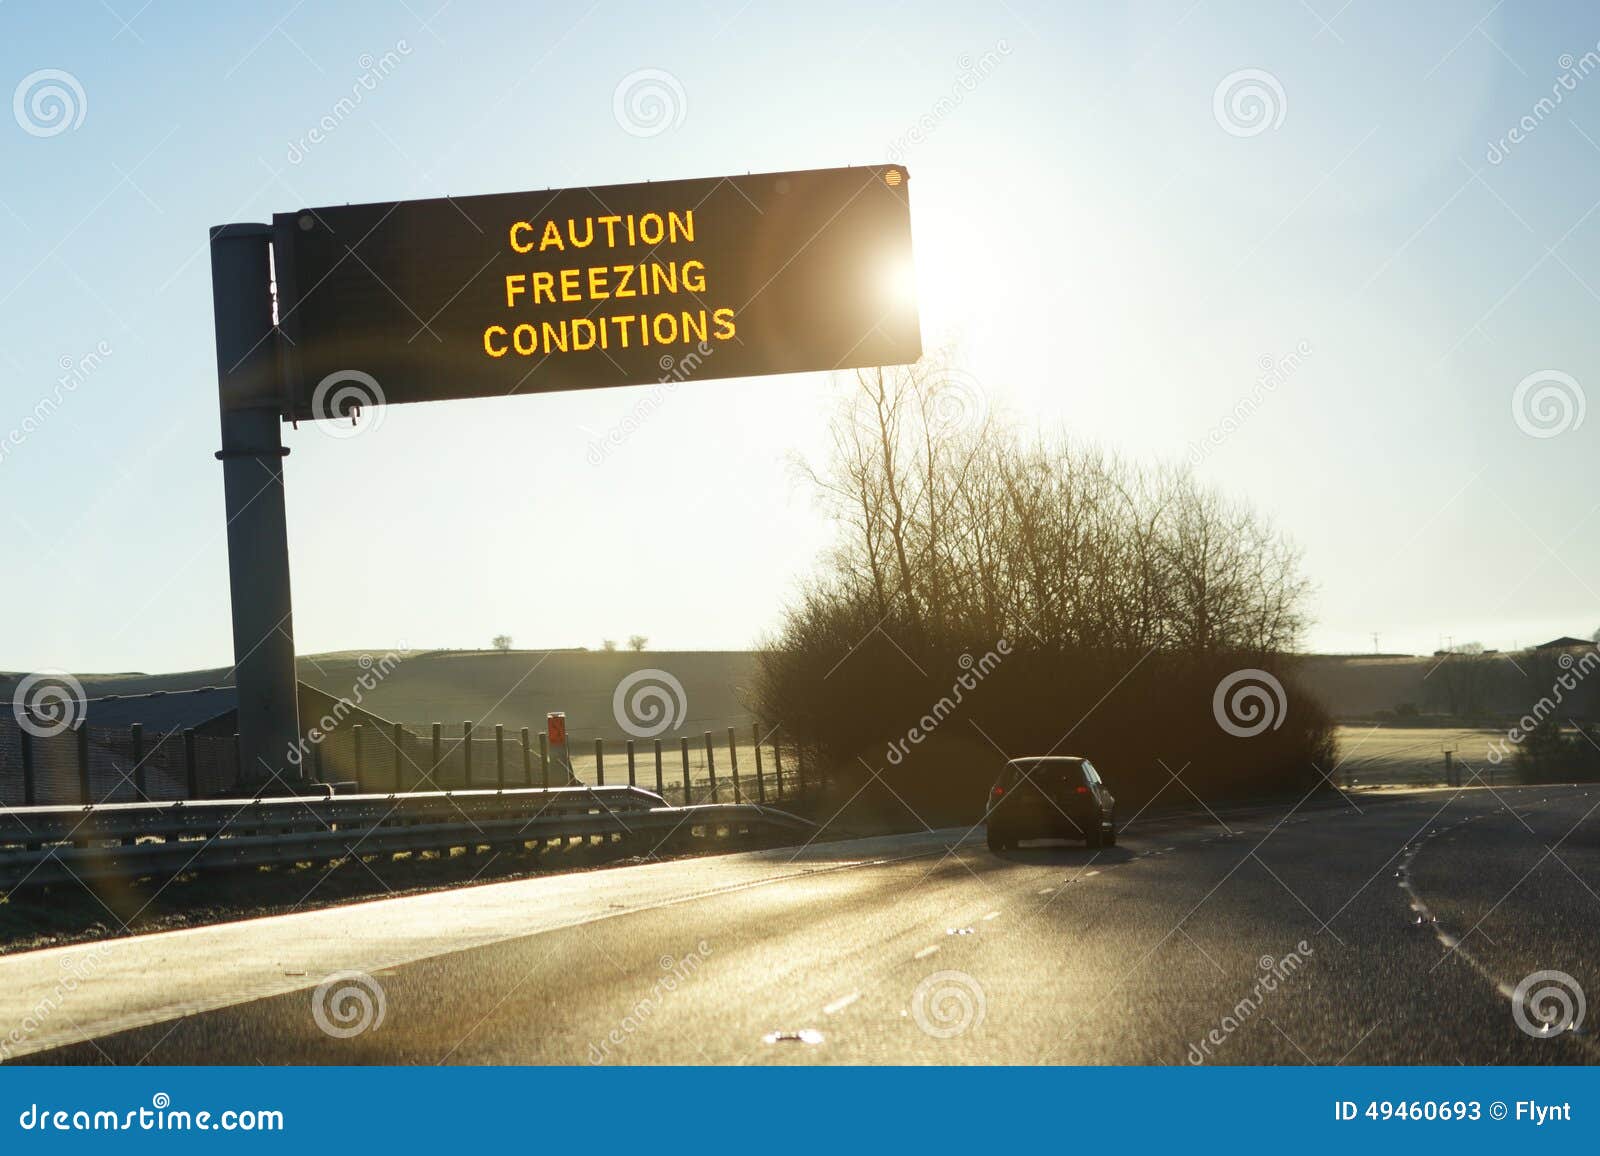 motorway gantry sign in winter